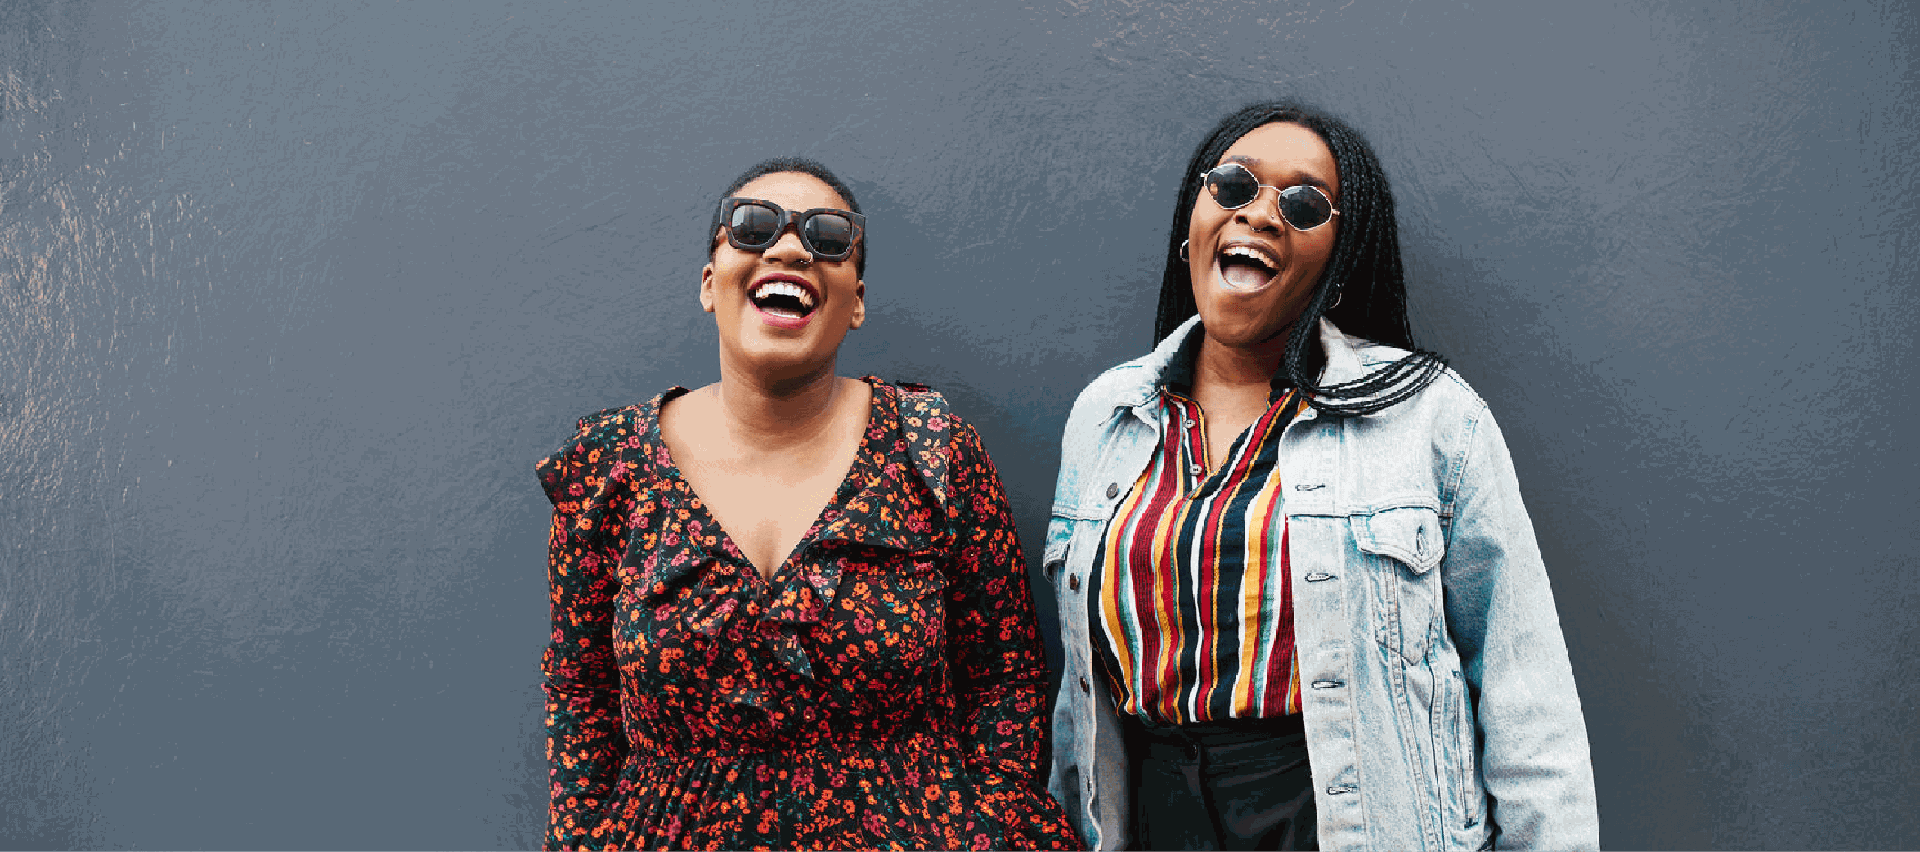 Two smiling women wearing sunglasses